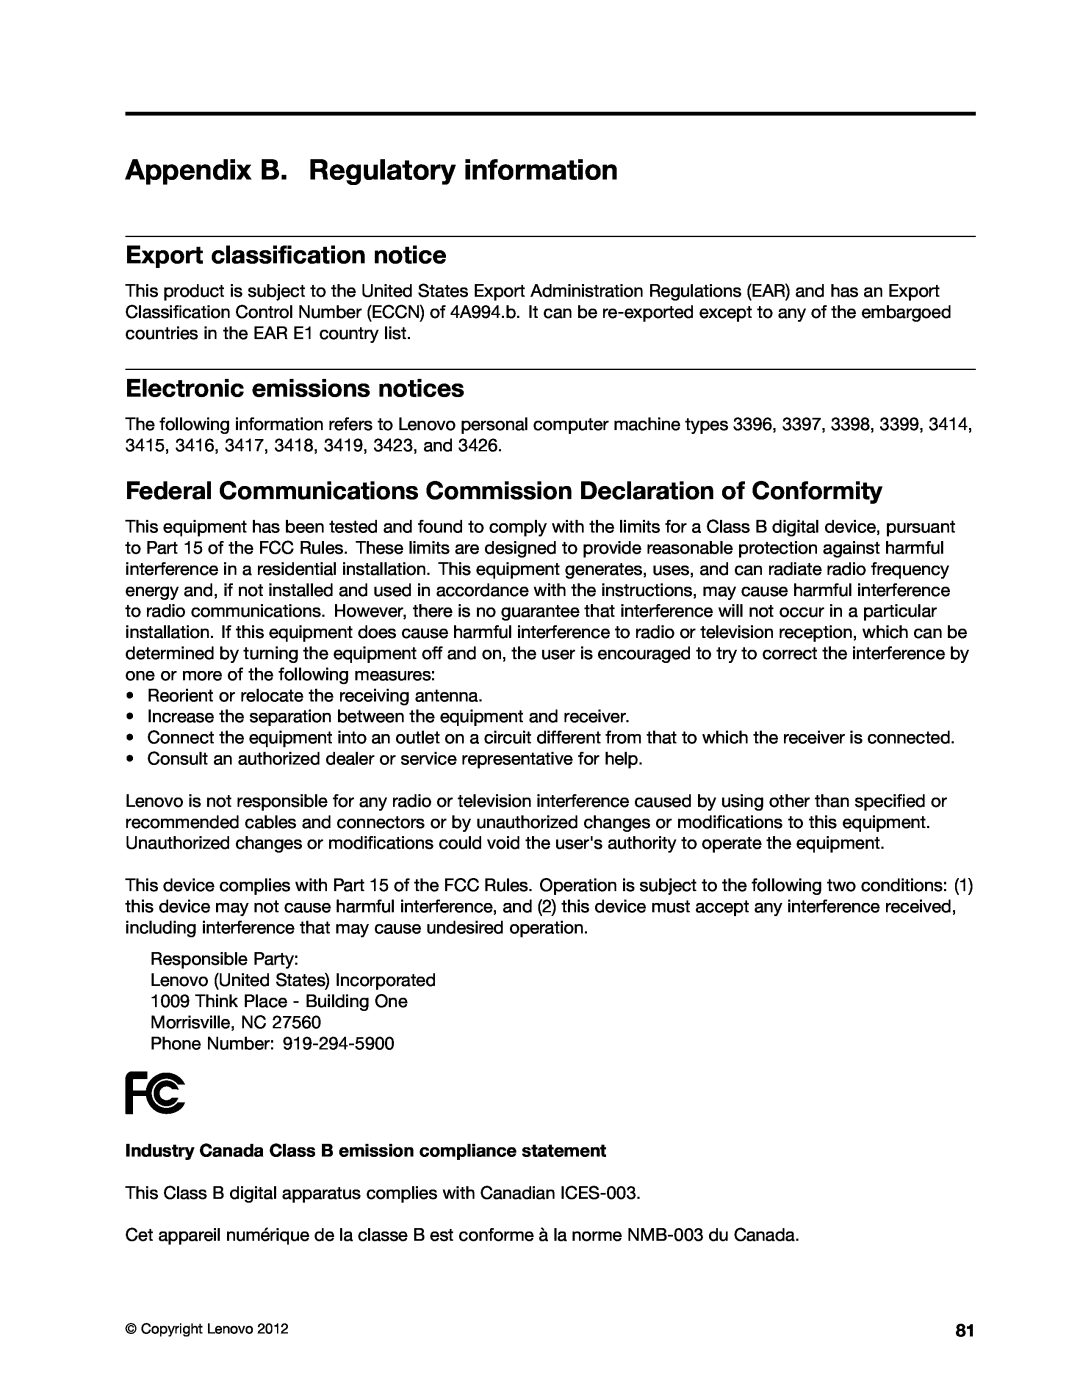 Lenovo 3418, 3398, 3397, 3399 Appendix B. Regulatory information, Export classification notice, Electronic emissions notices 